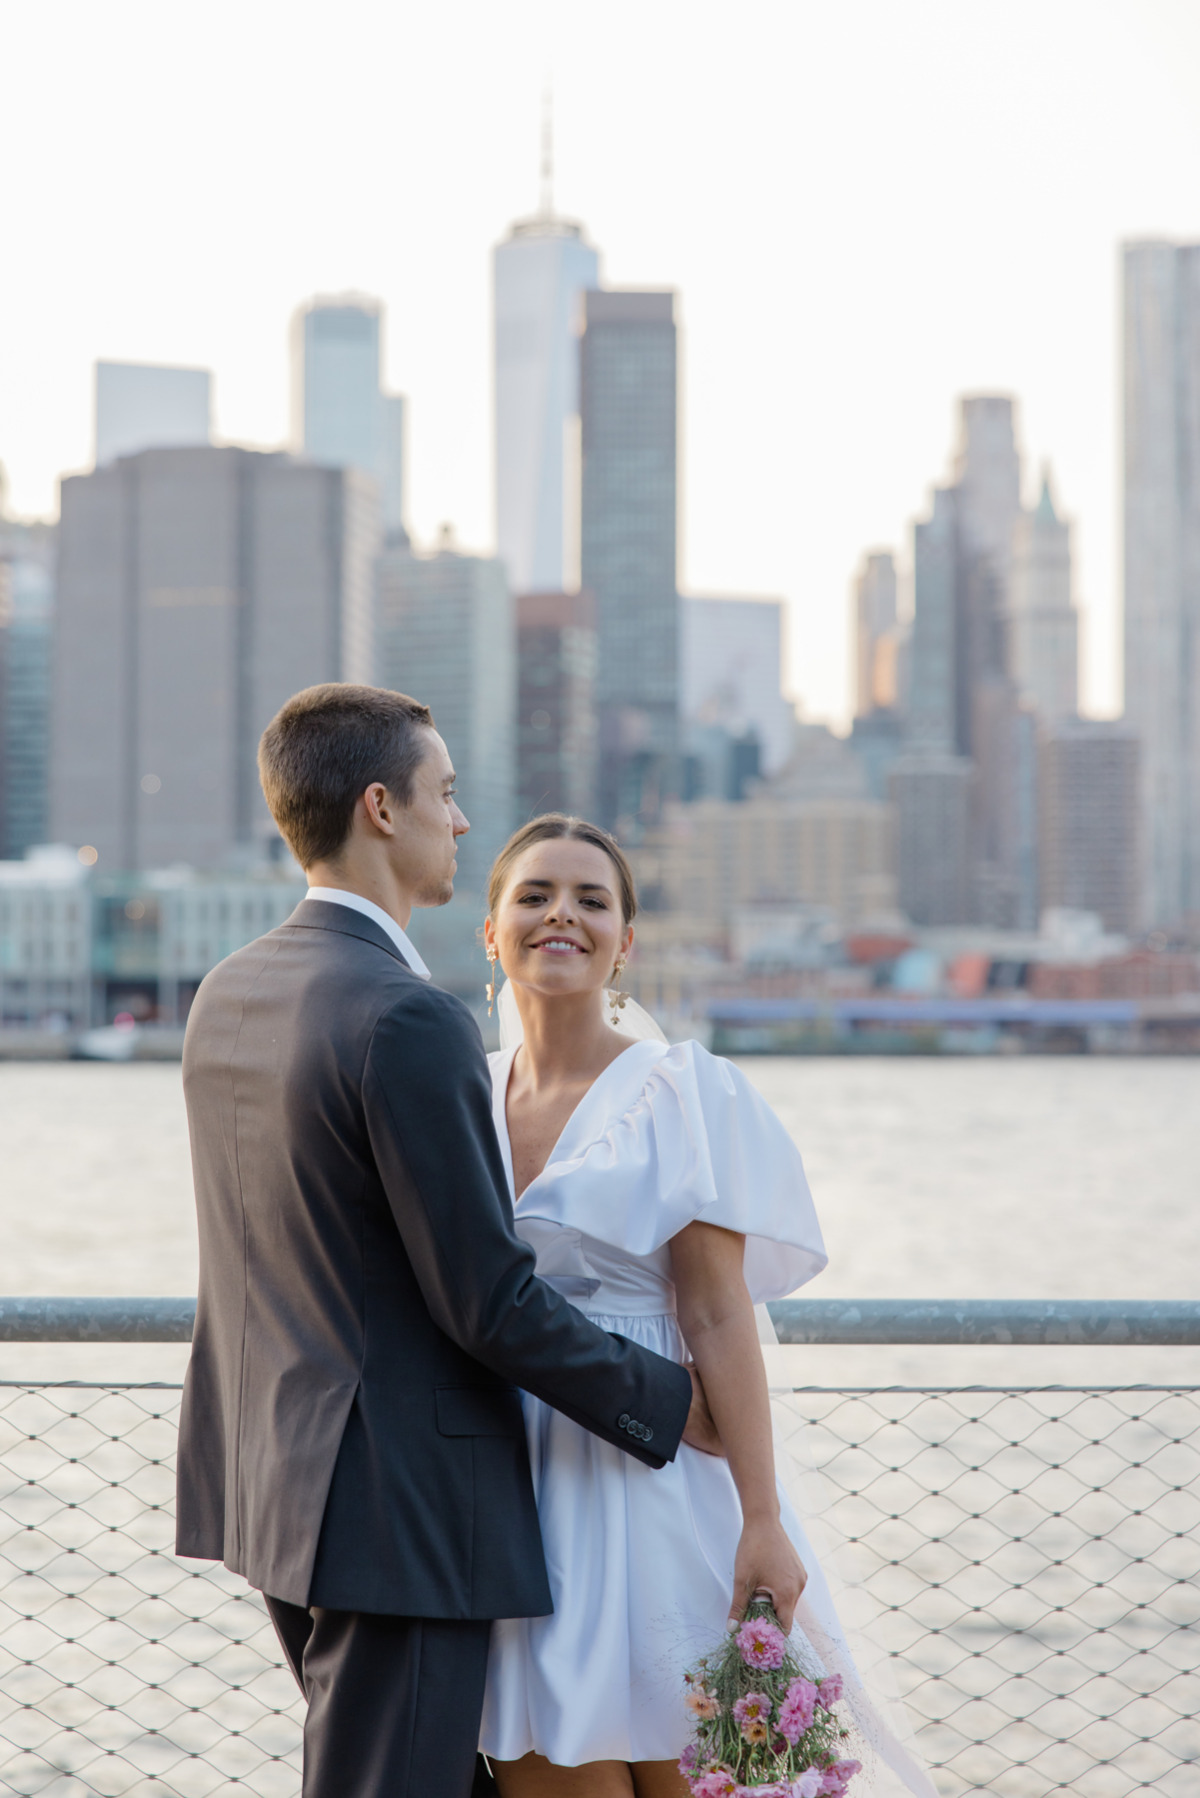 NYC skyline wedding photos